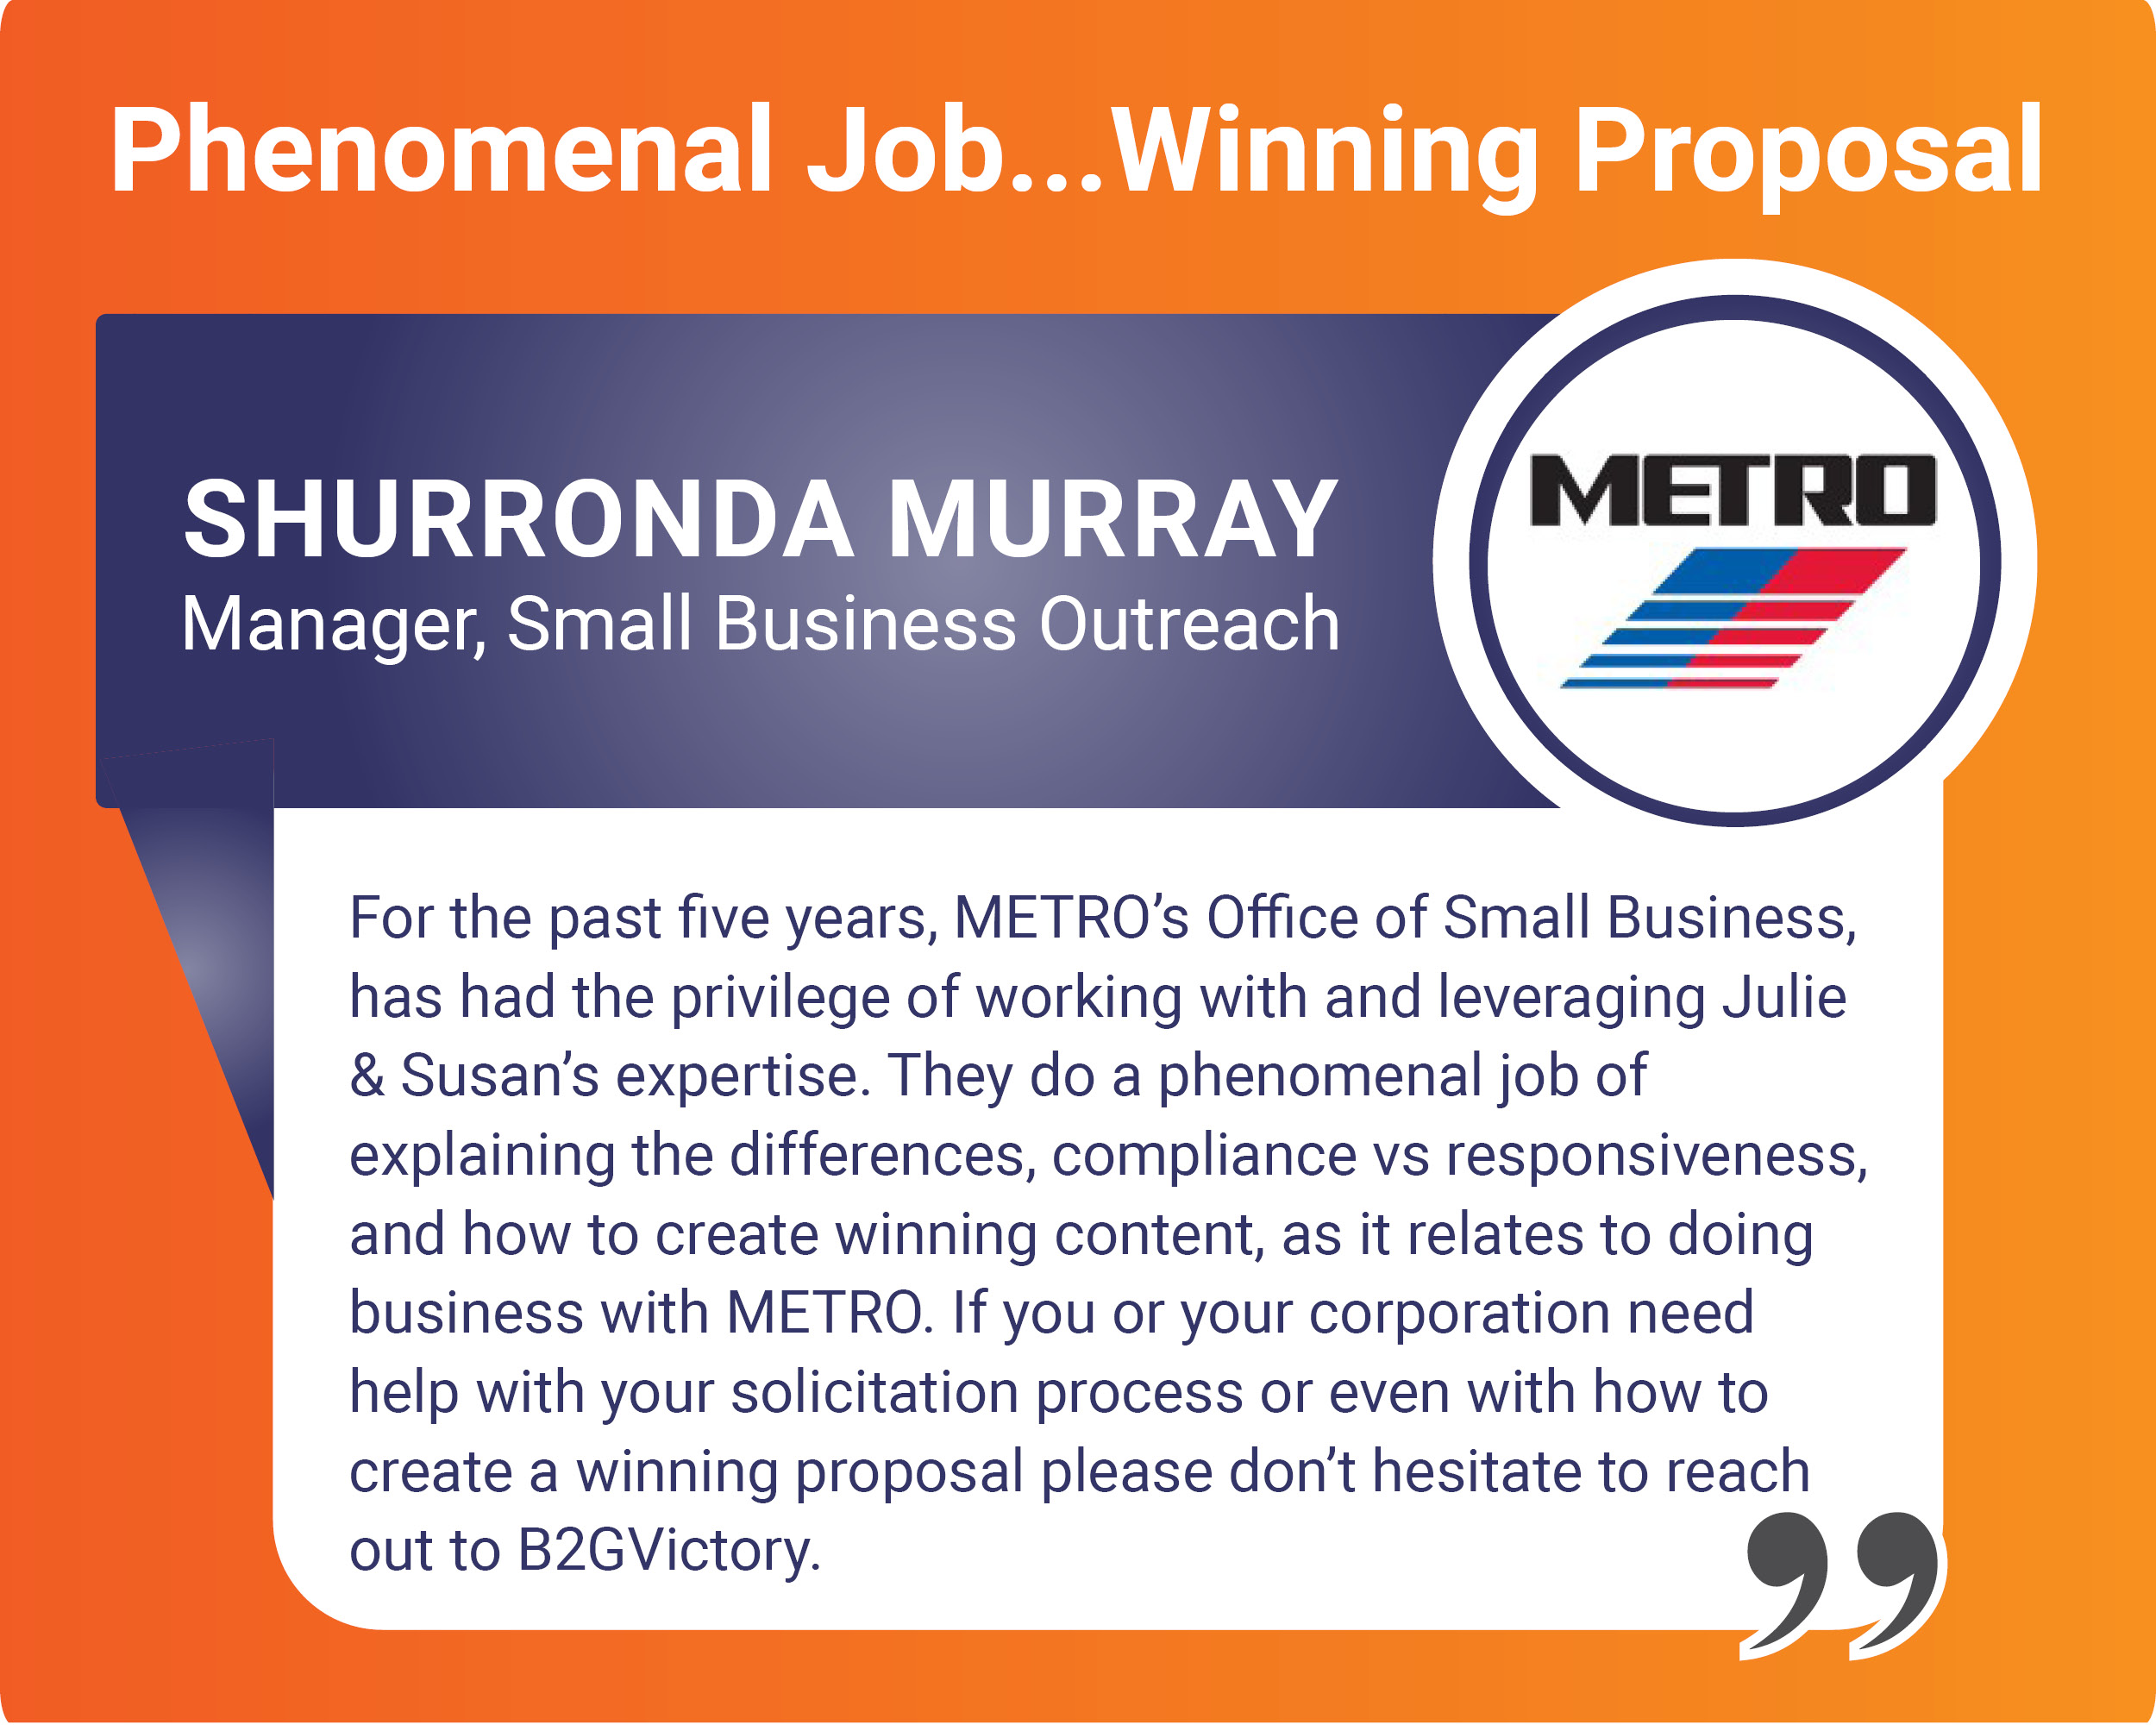 Testimonial from Shurronda Murray of METRO